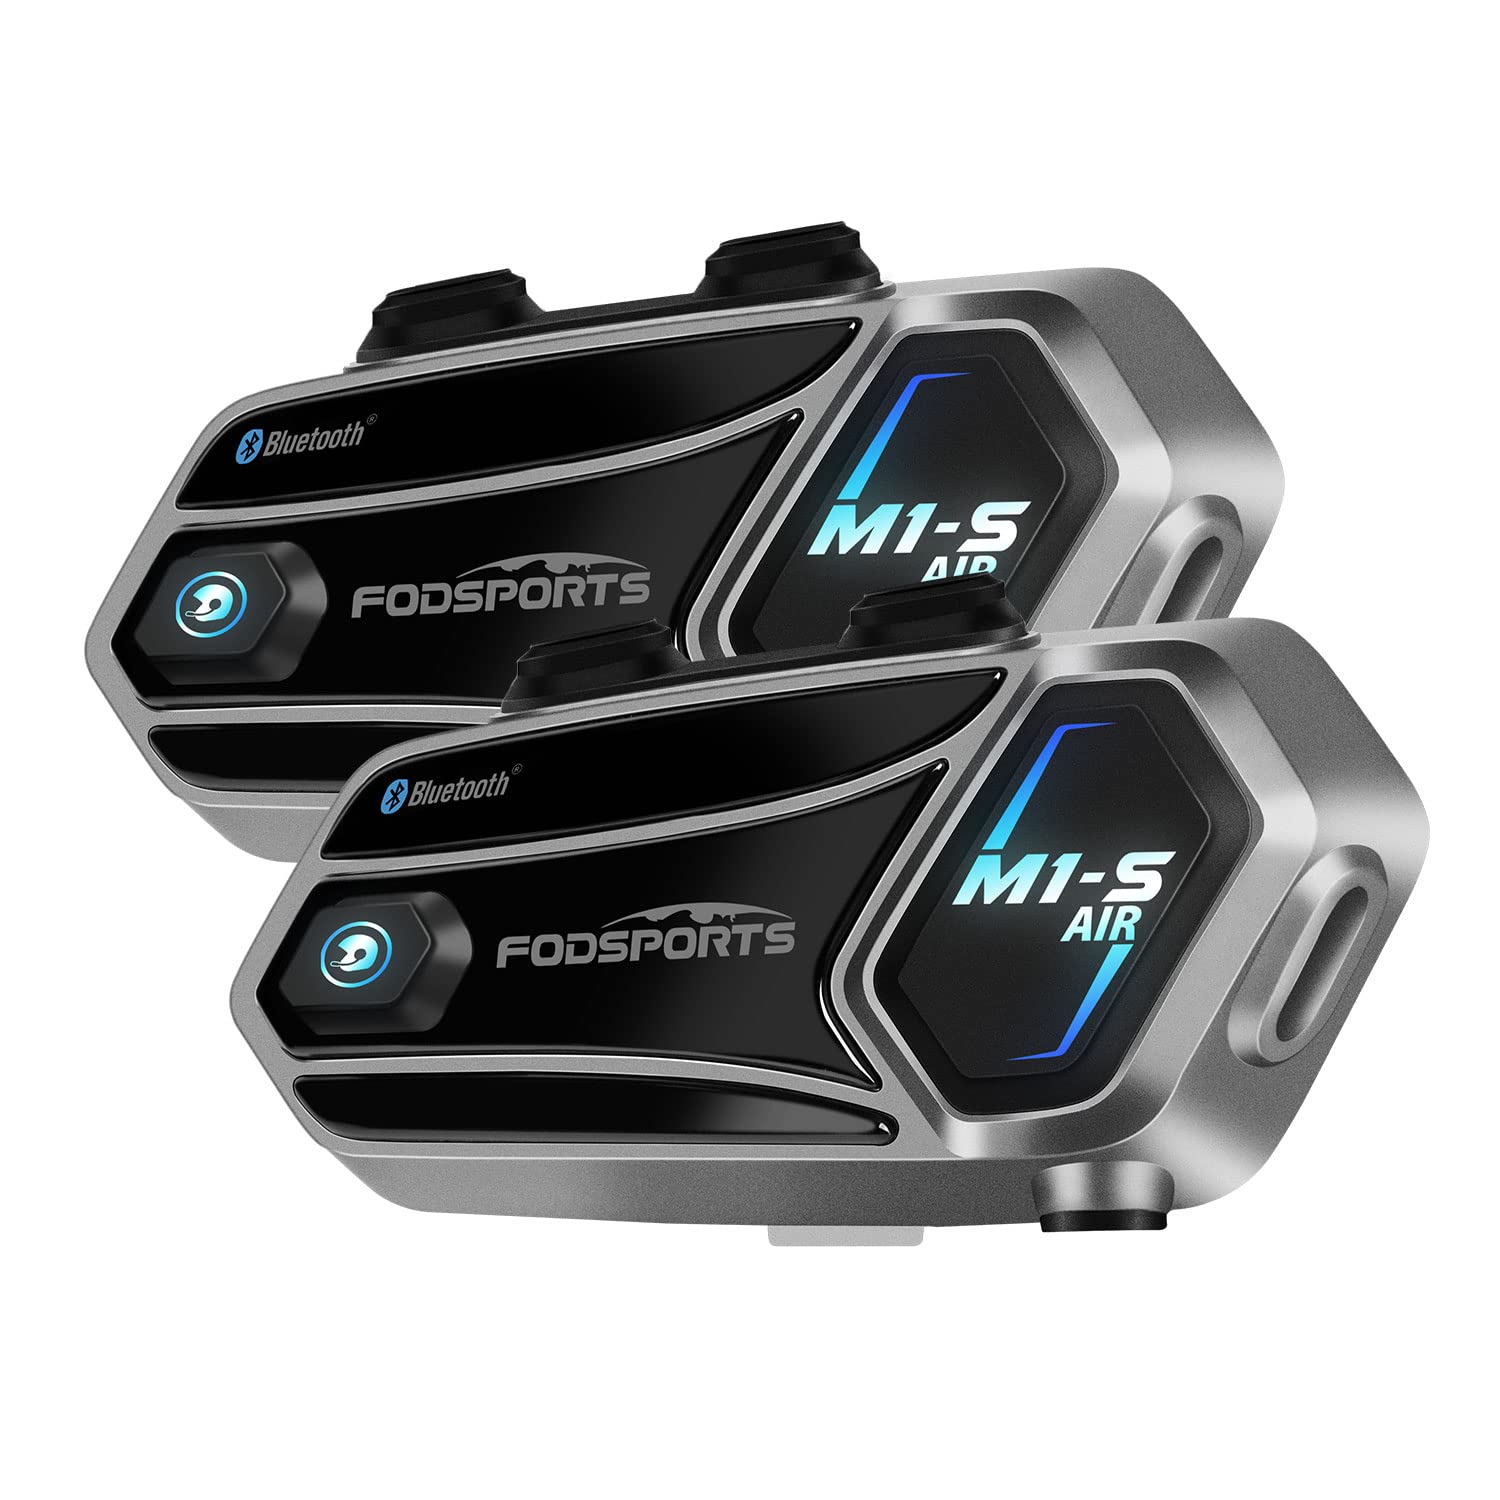 FODSPORTS バイク インカム M1-S Air インカム 連続使用20時間 接続自動復帰 3riders 2人通話 ワイドFM搭載 音楽共有 3段階音質調整 電源残量表示 ユニバーサル接続 オートバイ用Bluetoothヘッ…